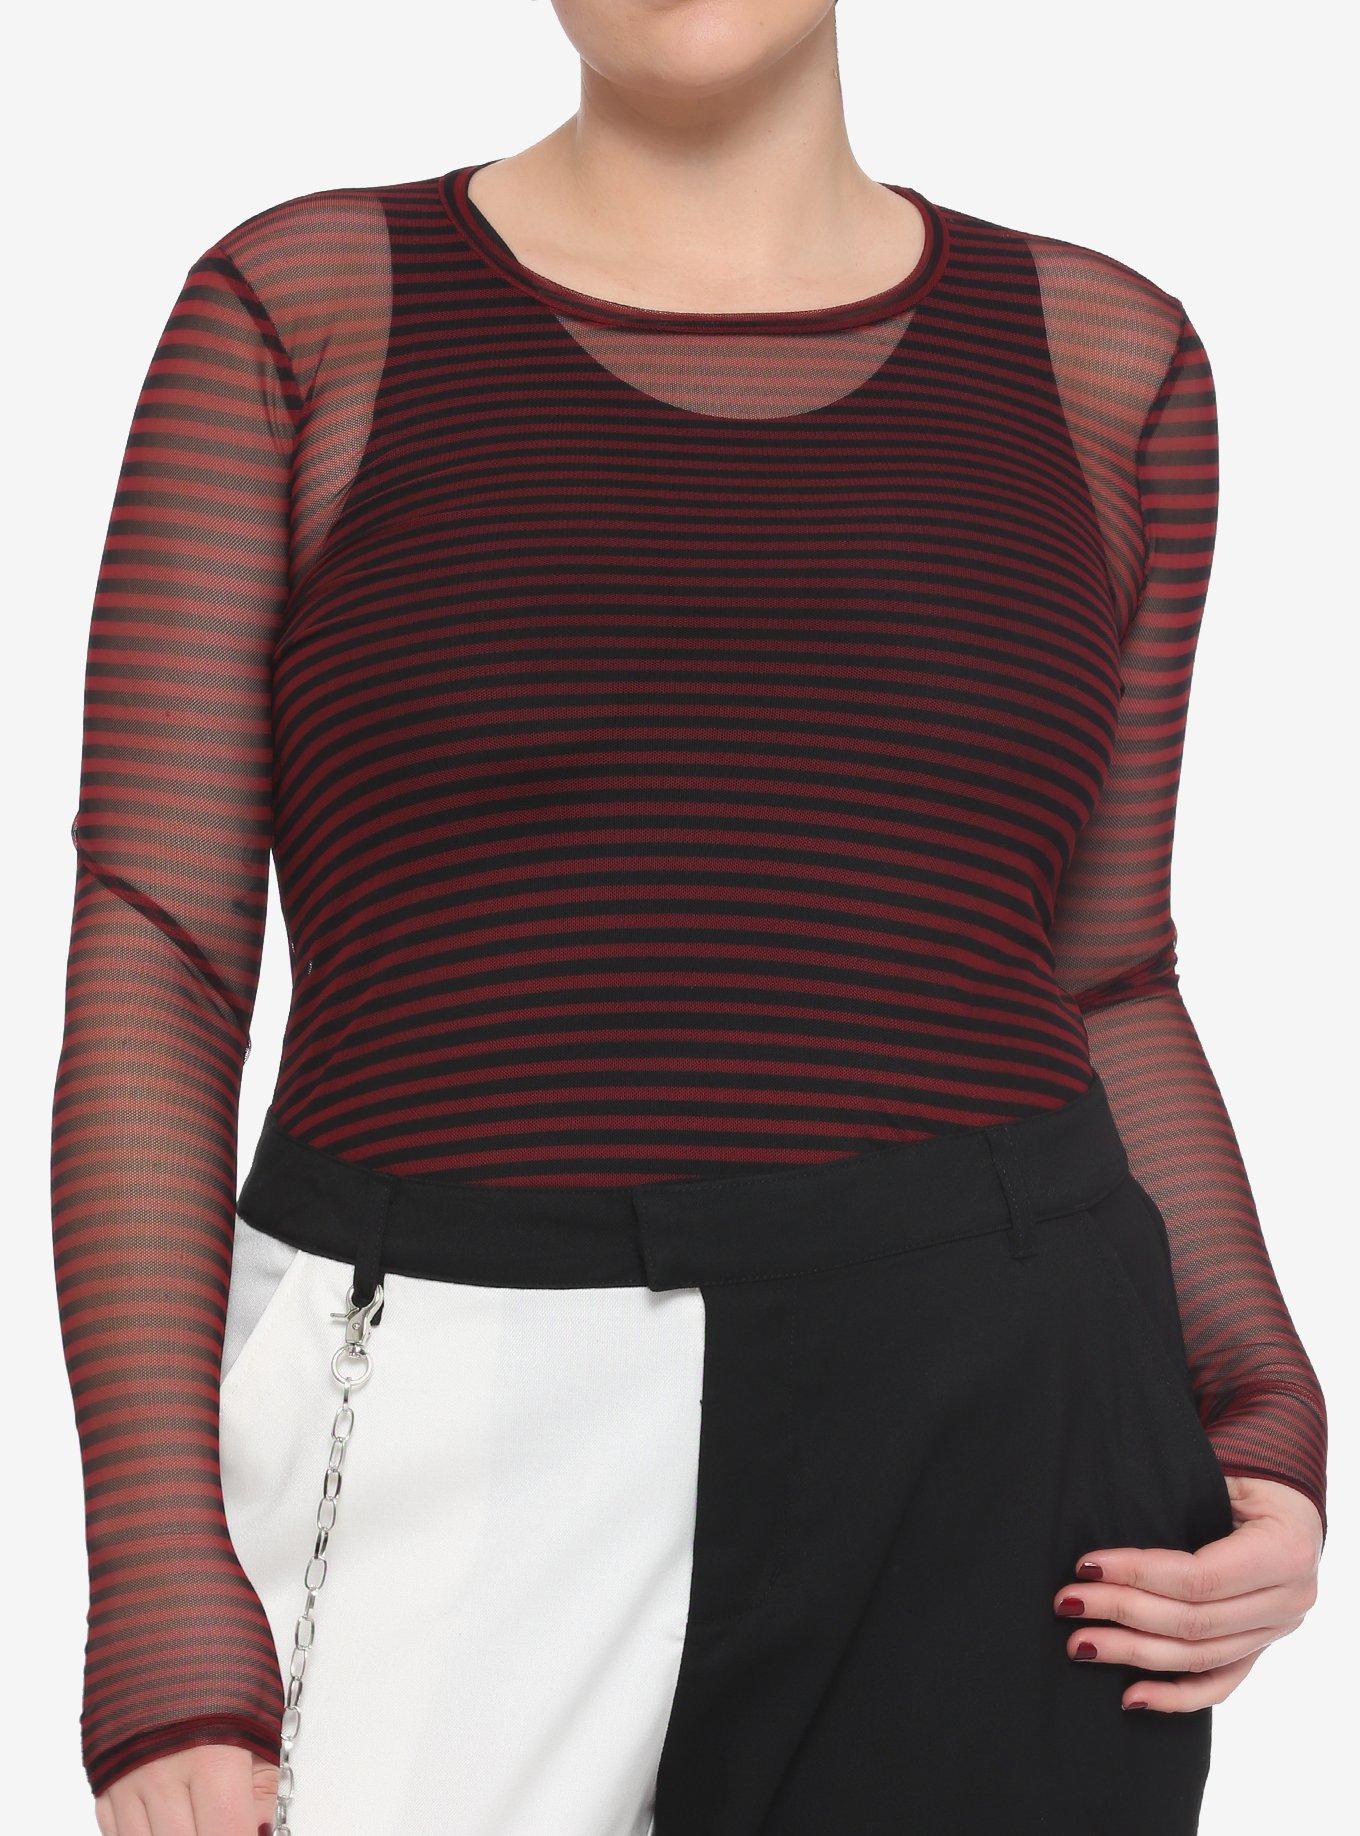 Black & Red Stripe Mesh Girls Long-Sleeve Top Plus Size, STRIPES, hi-res